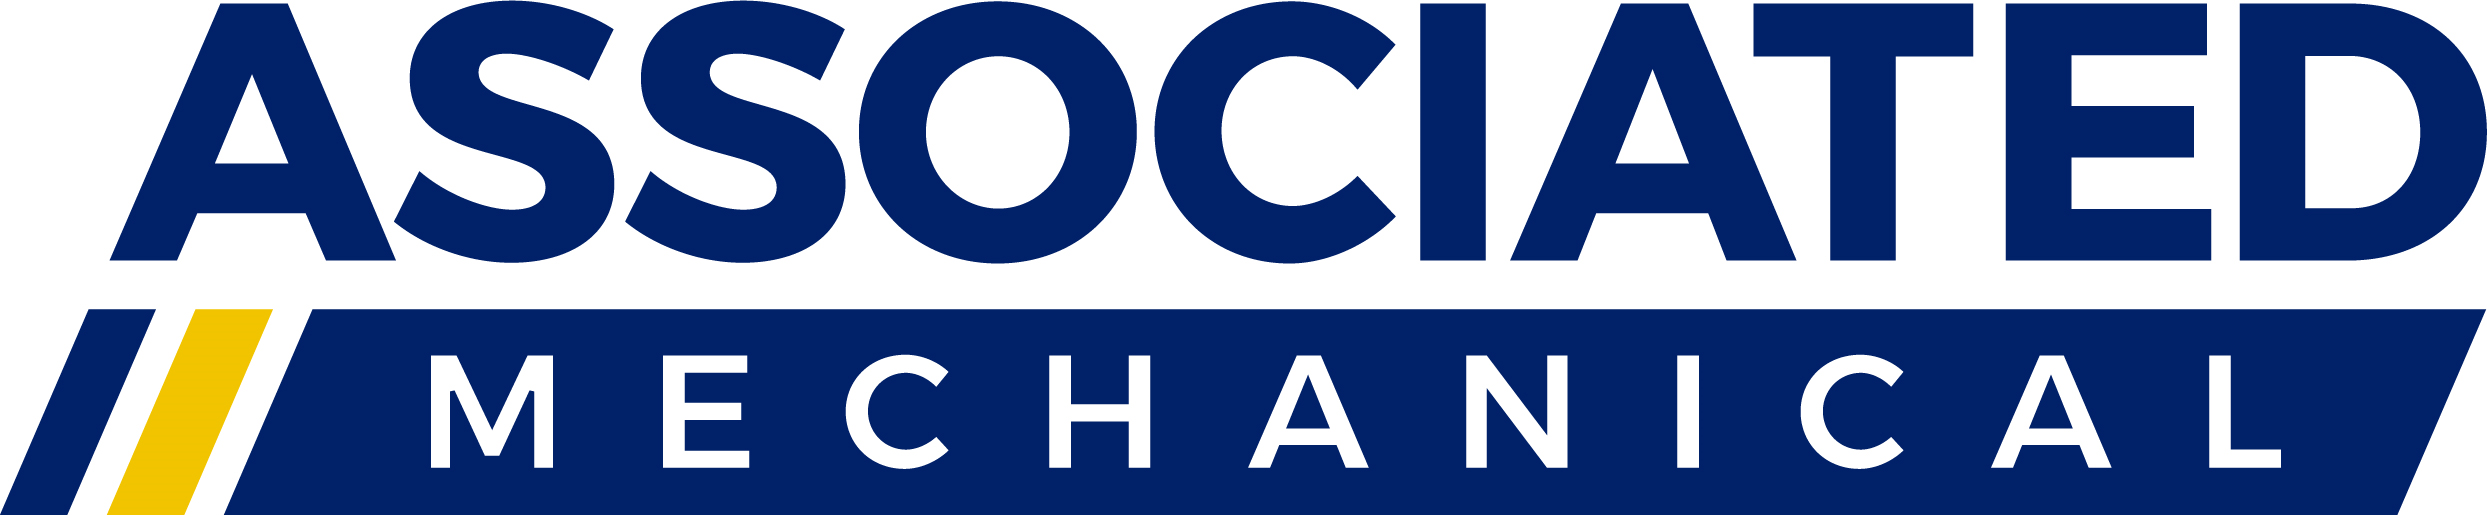 Associated Mechanical Contractors, Inc. logo